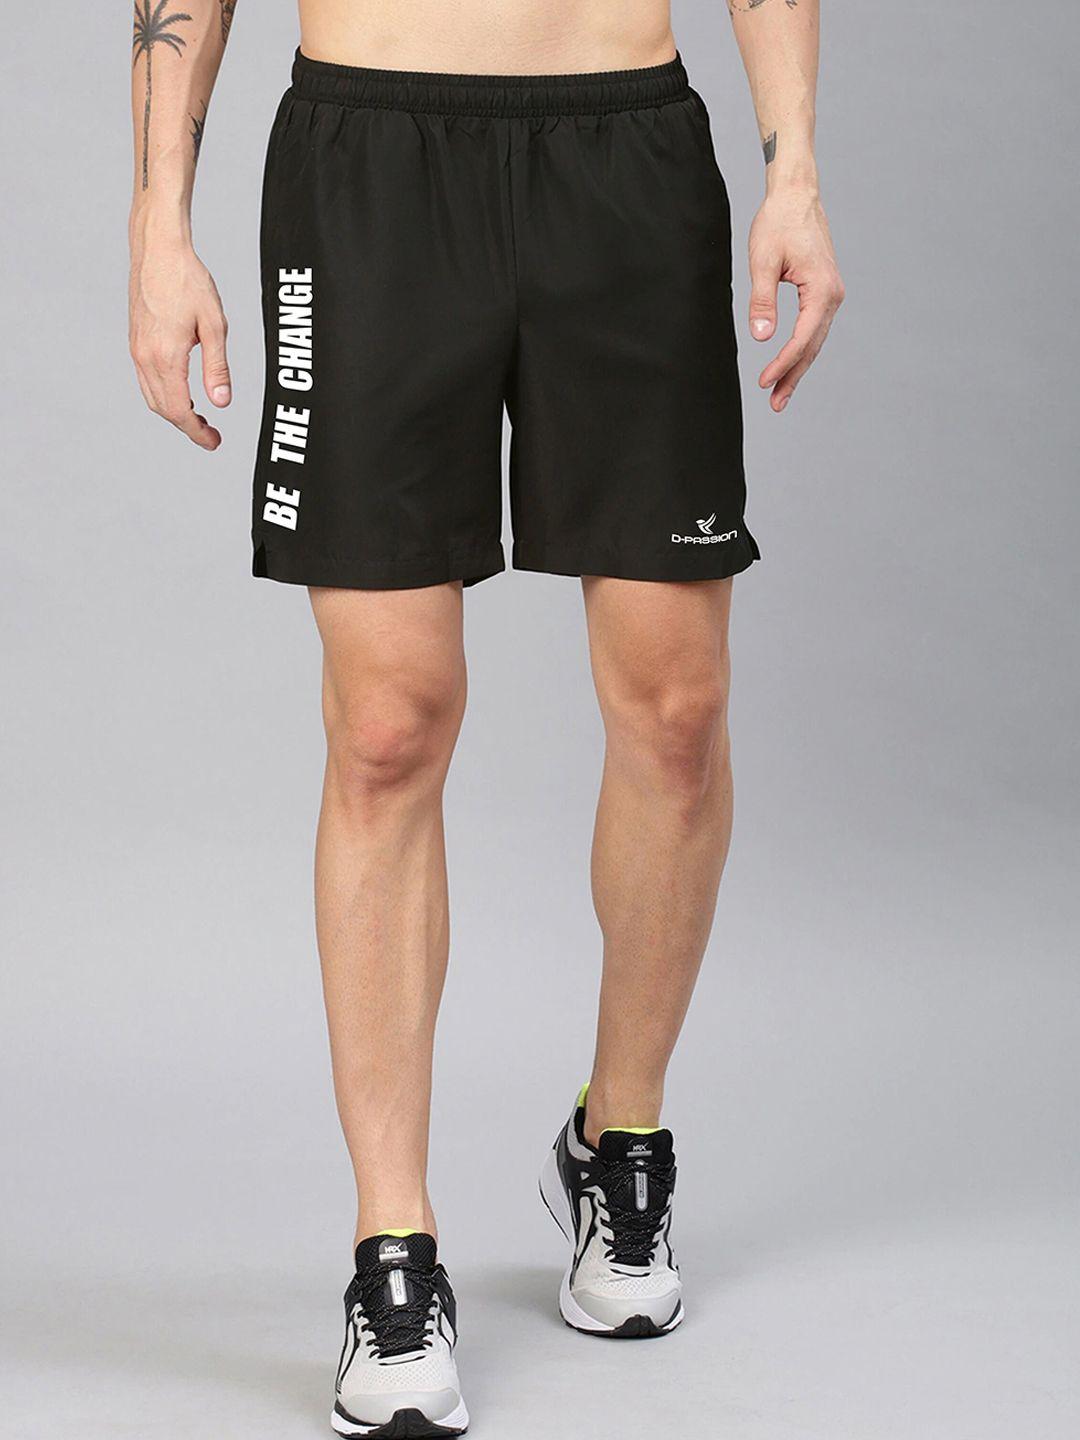 dpassion-men-black-running-sports-shorts